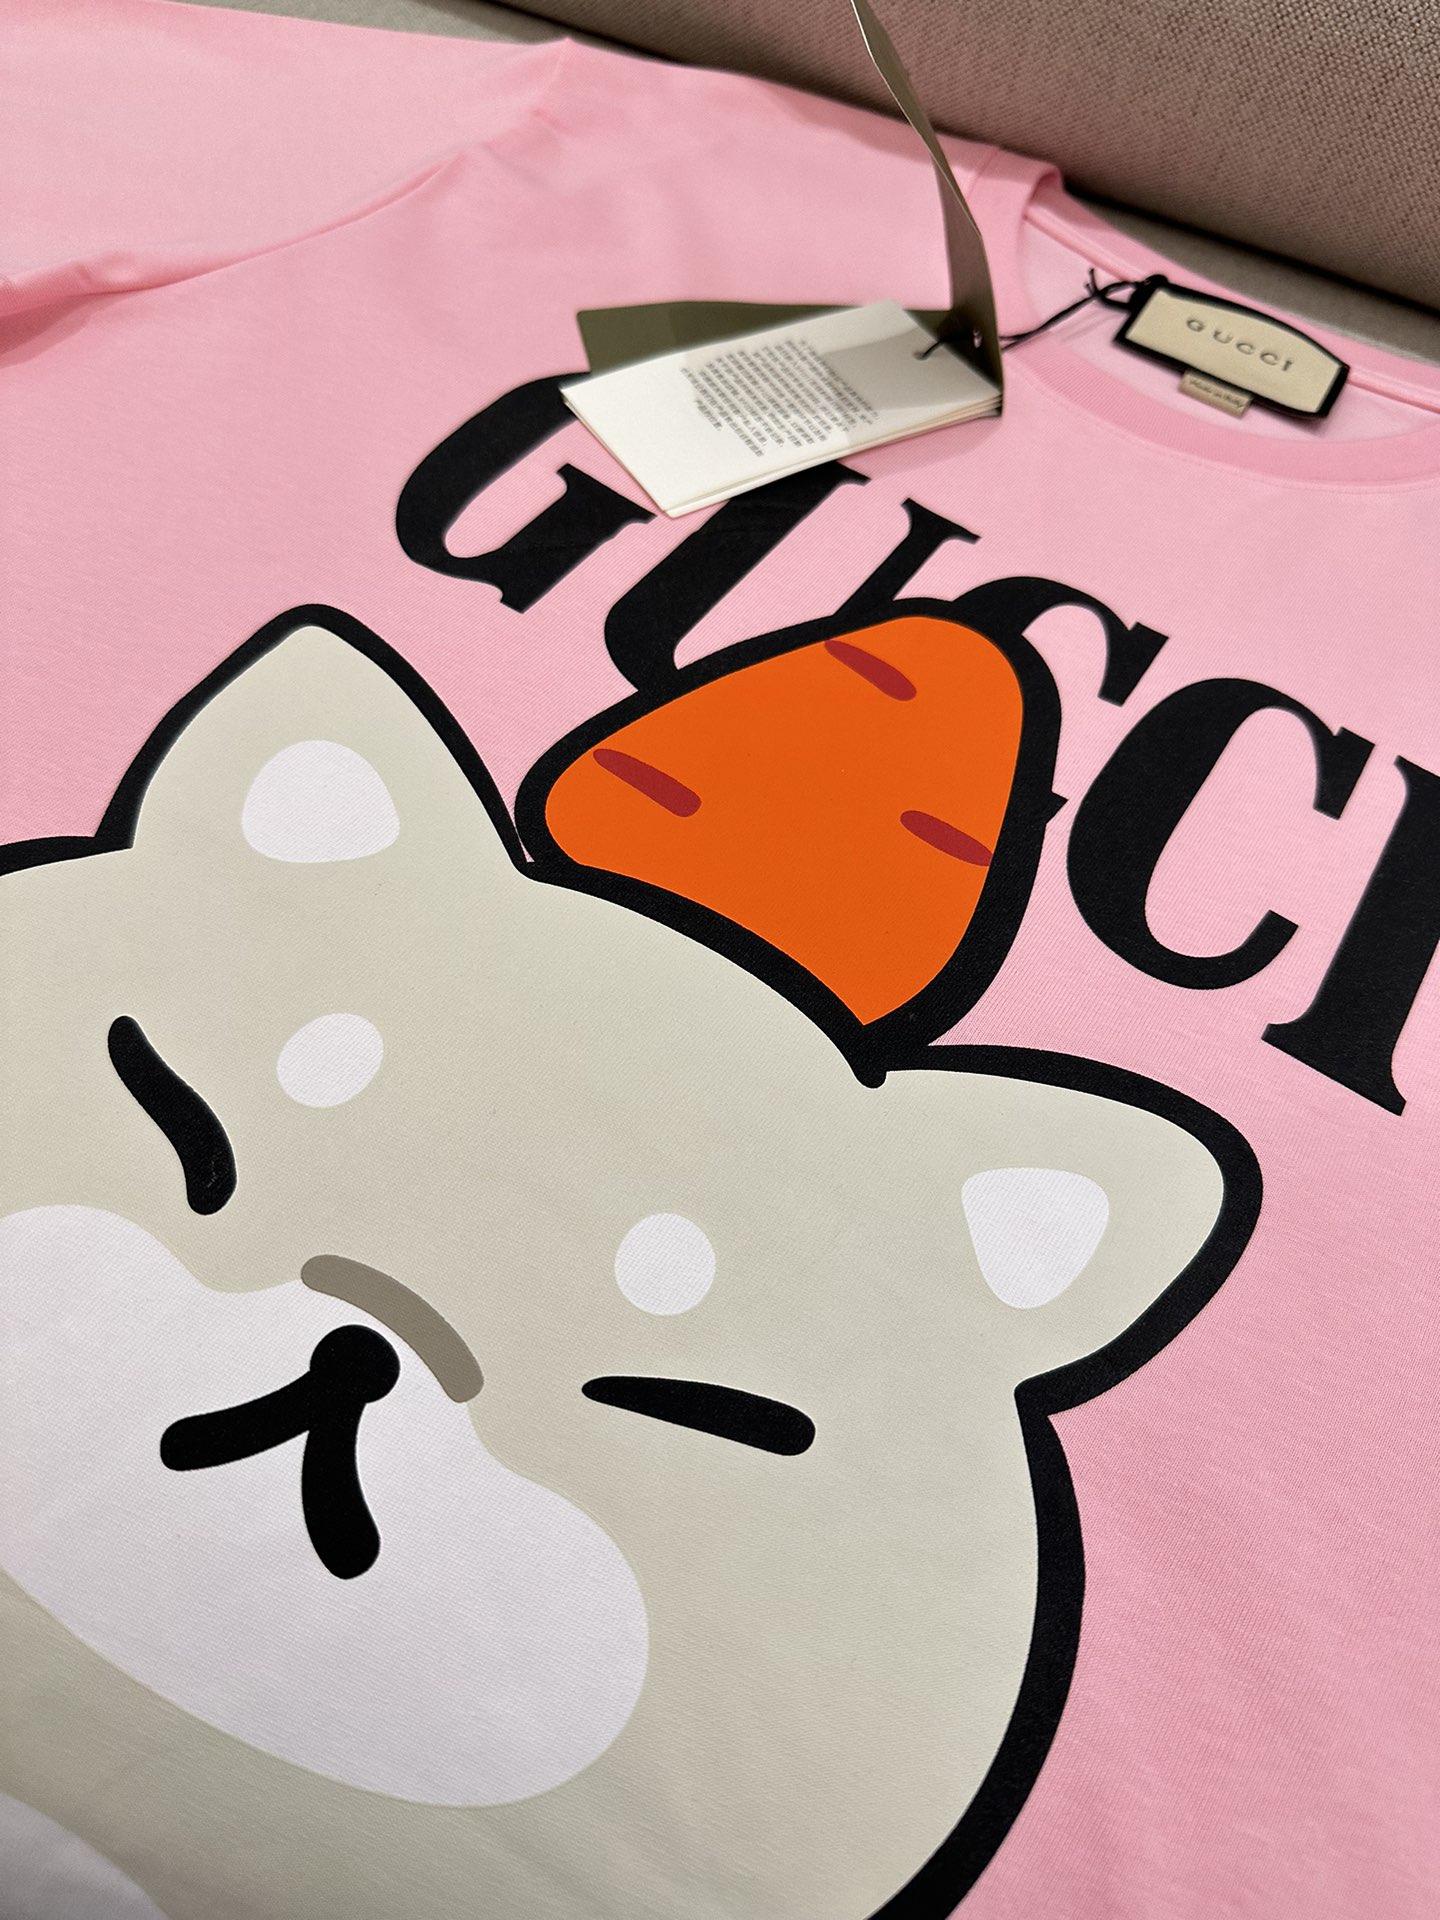 gucci-animal-print-cotton-t-shirt-7221_16844049056-1000